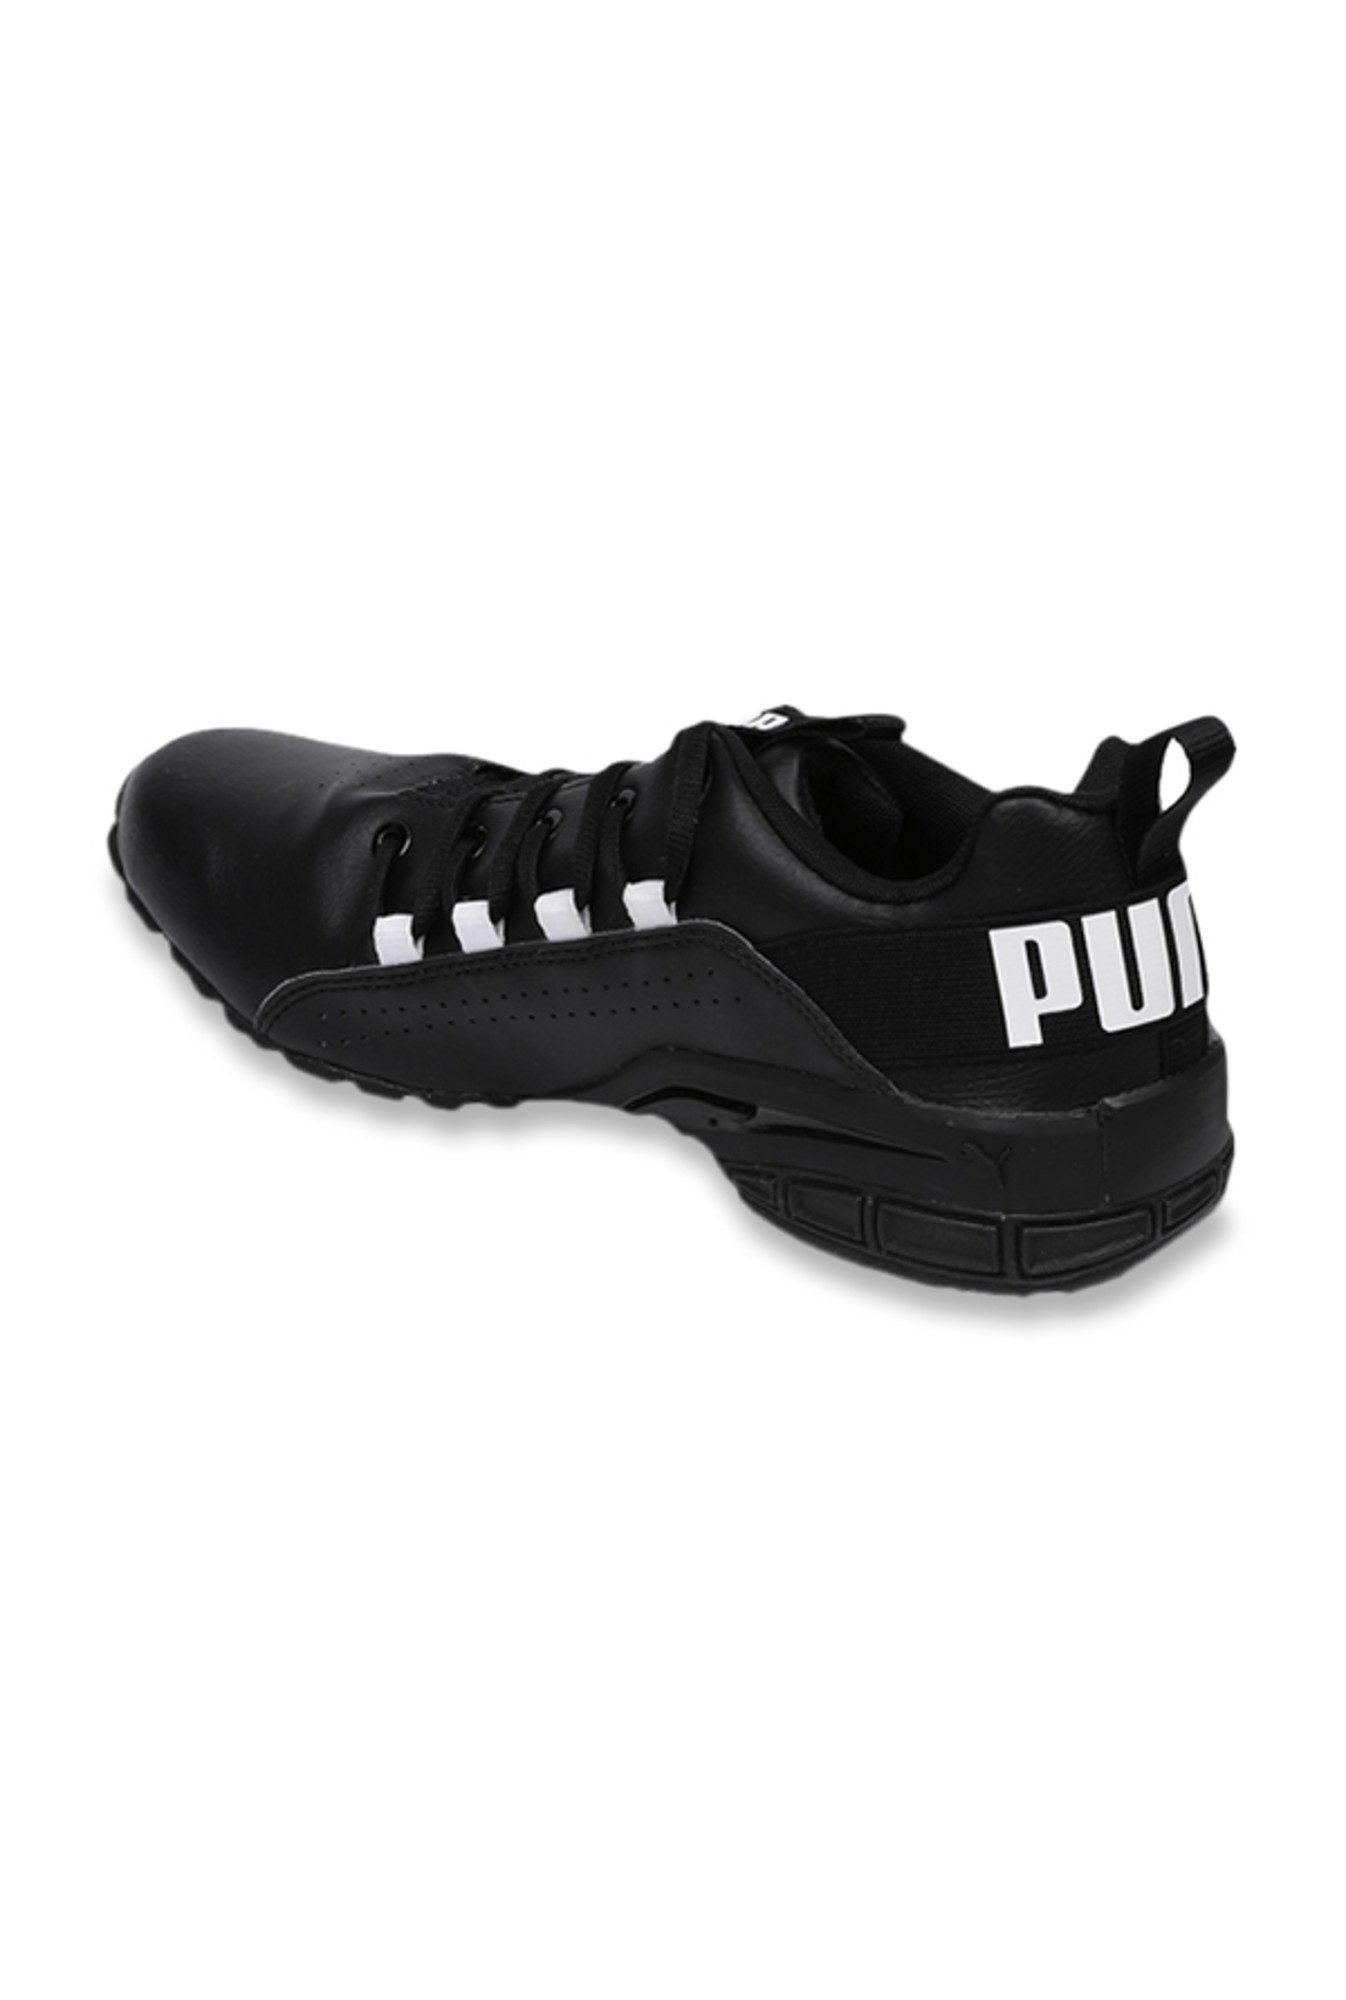 Puma Hexa Dot IDP Black Running Shoes 